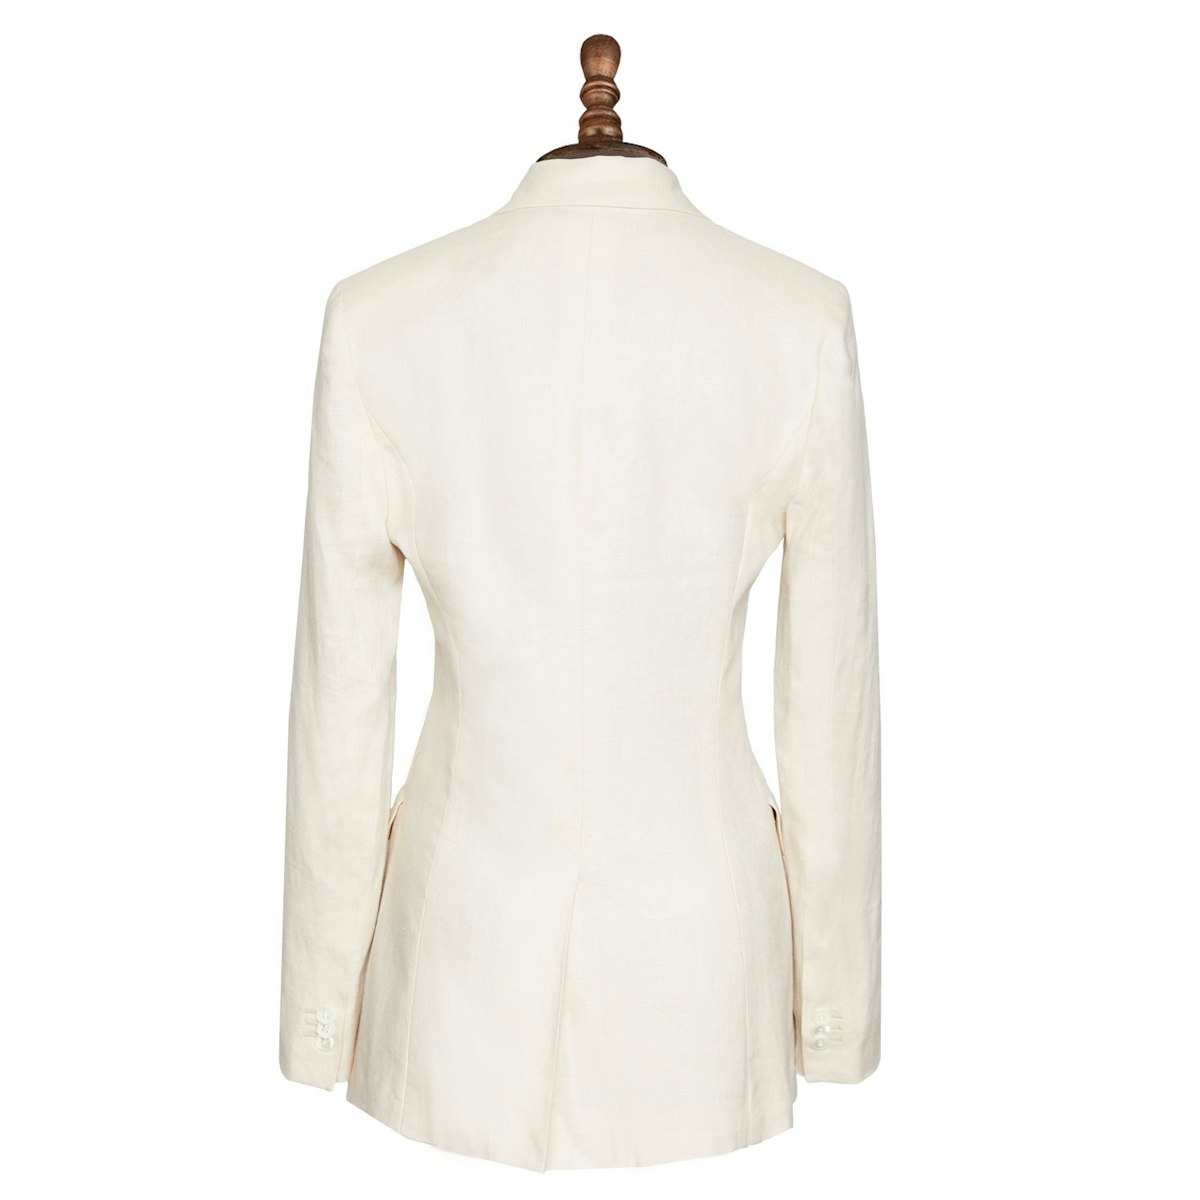 InStitchu Collection The Cabarita Cream Linen Jacket